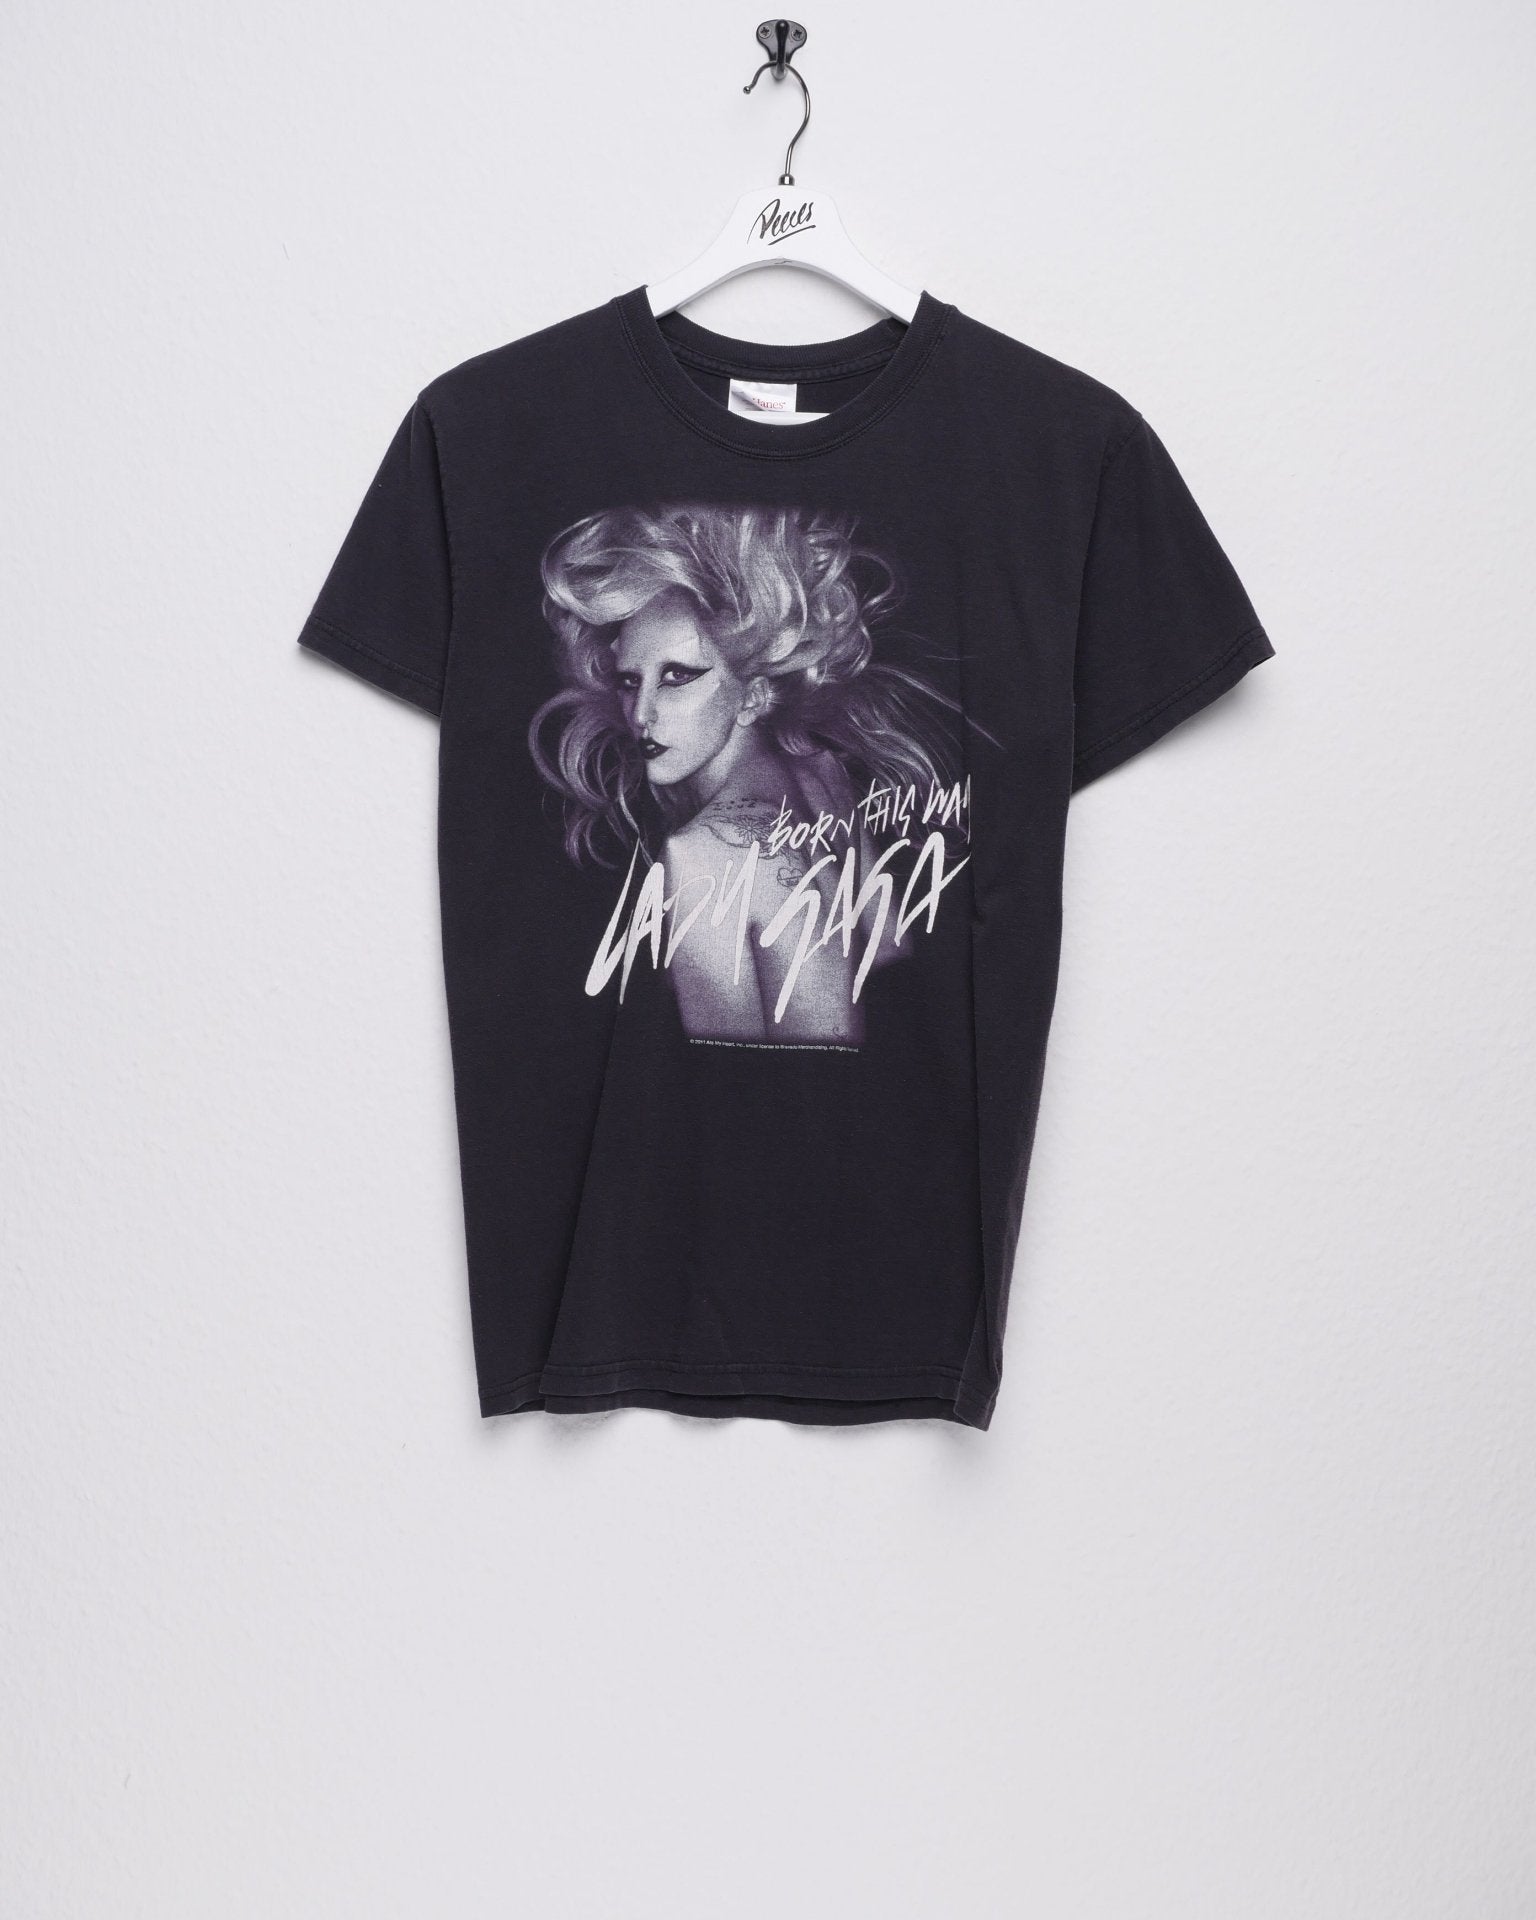 'Lady Gaga 2011' printed Graphic black Shirt - Peeces